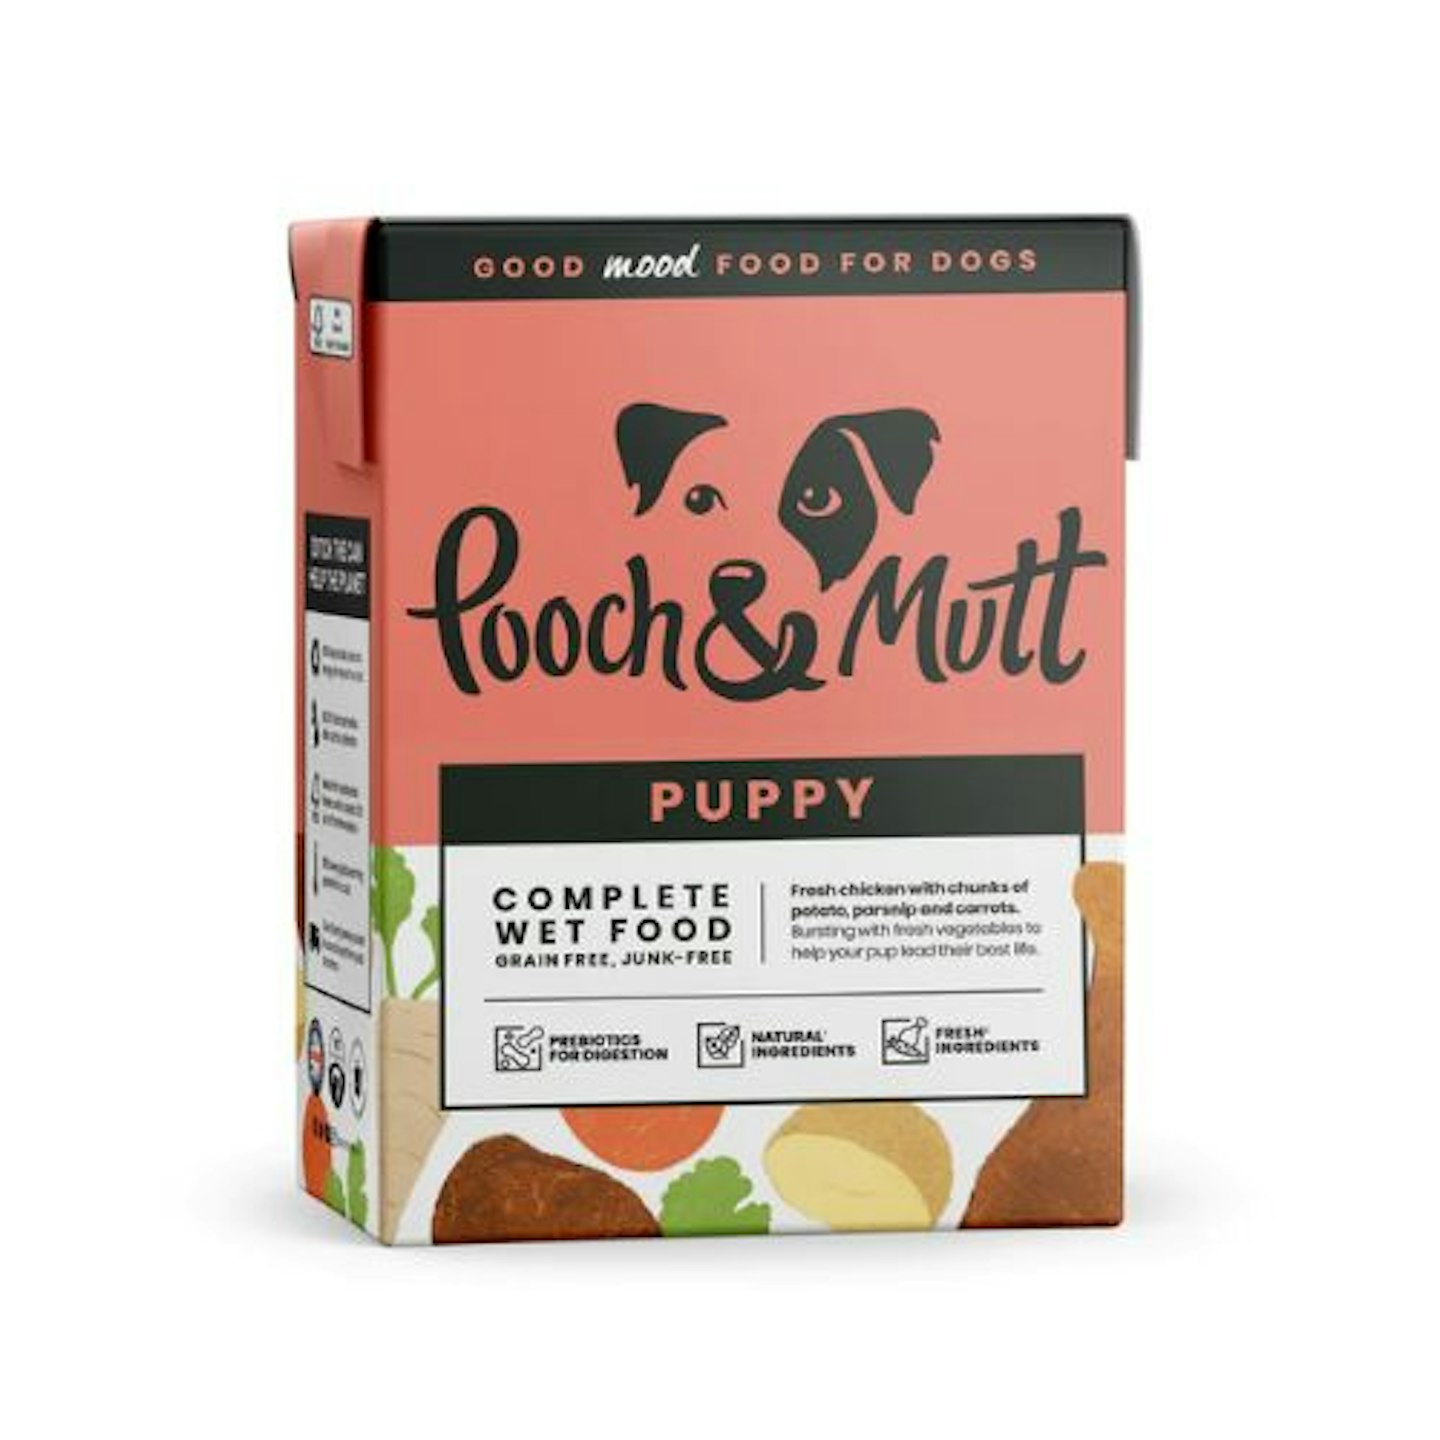 Pooch & Mutt Grain-Free Puppy Food